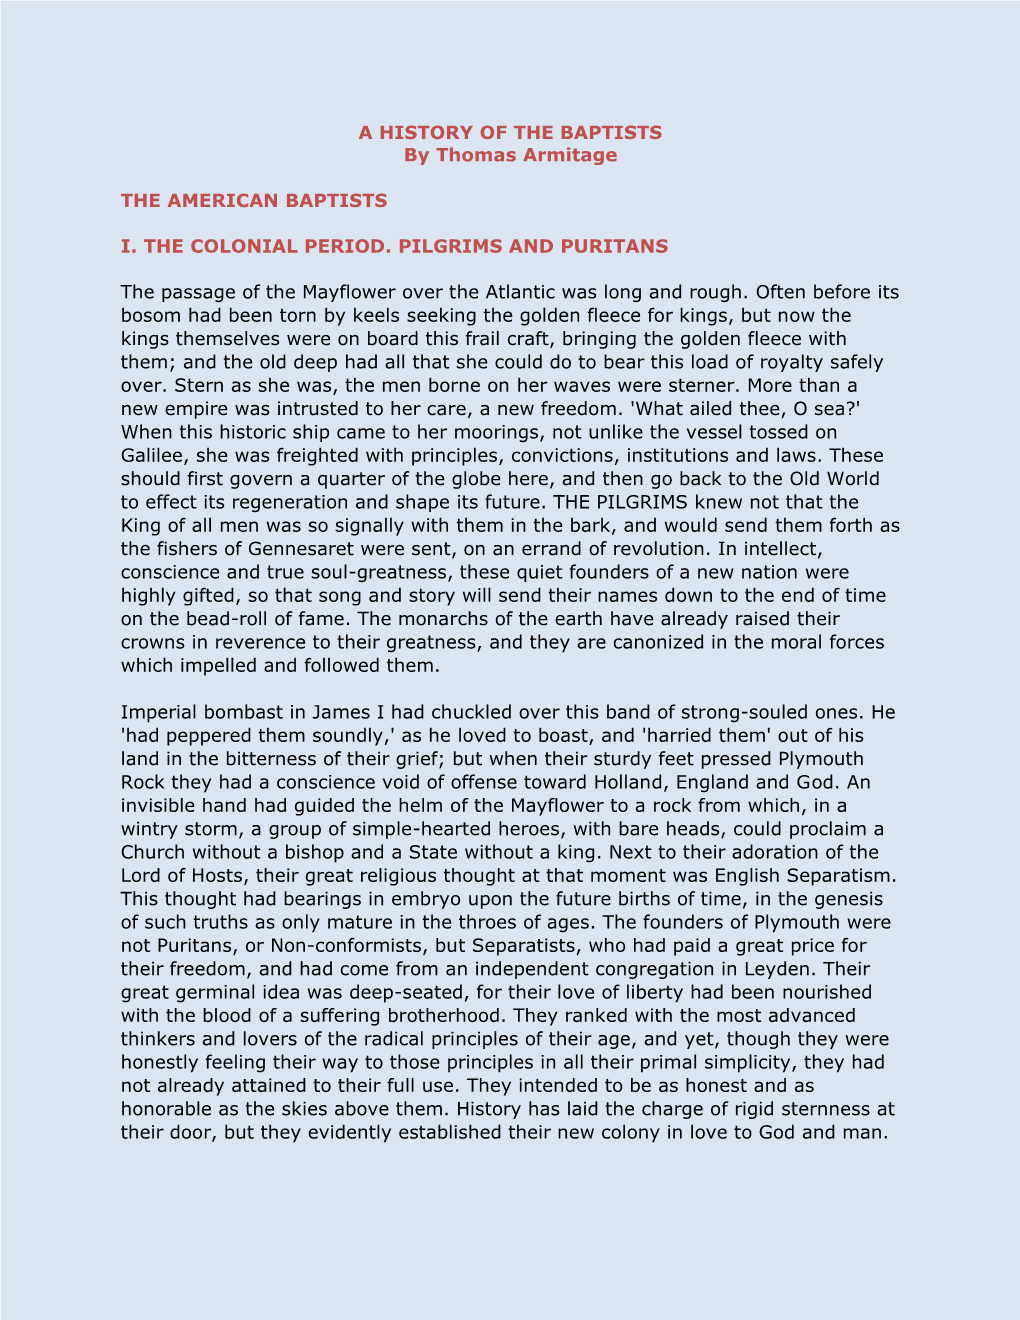 Full Text, a History of the Baptists, Thomas Armitage